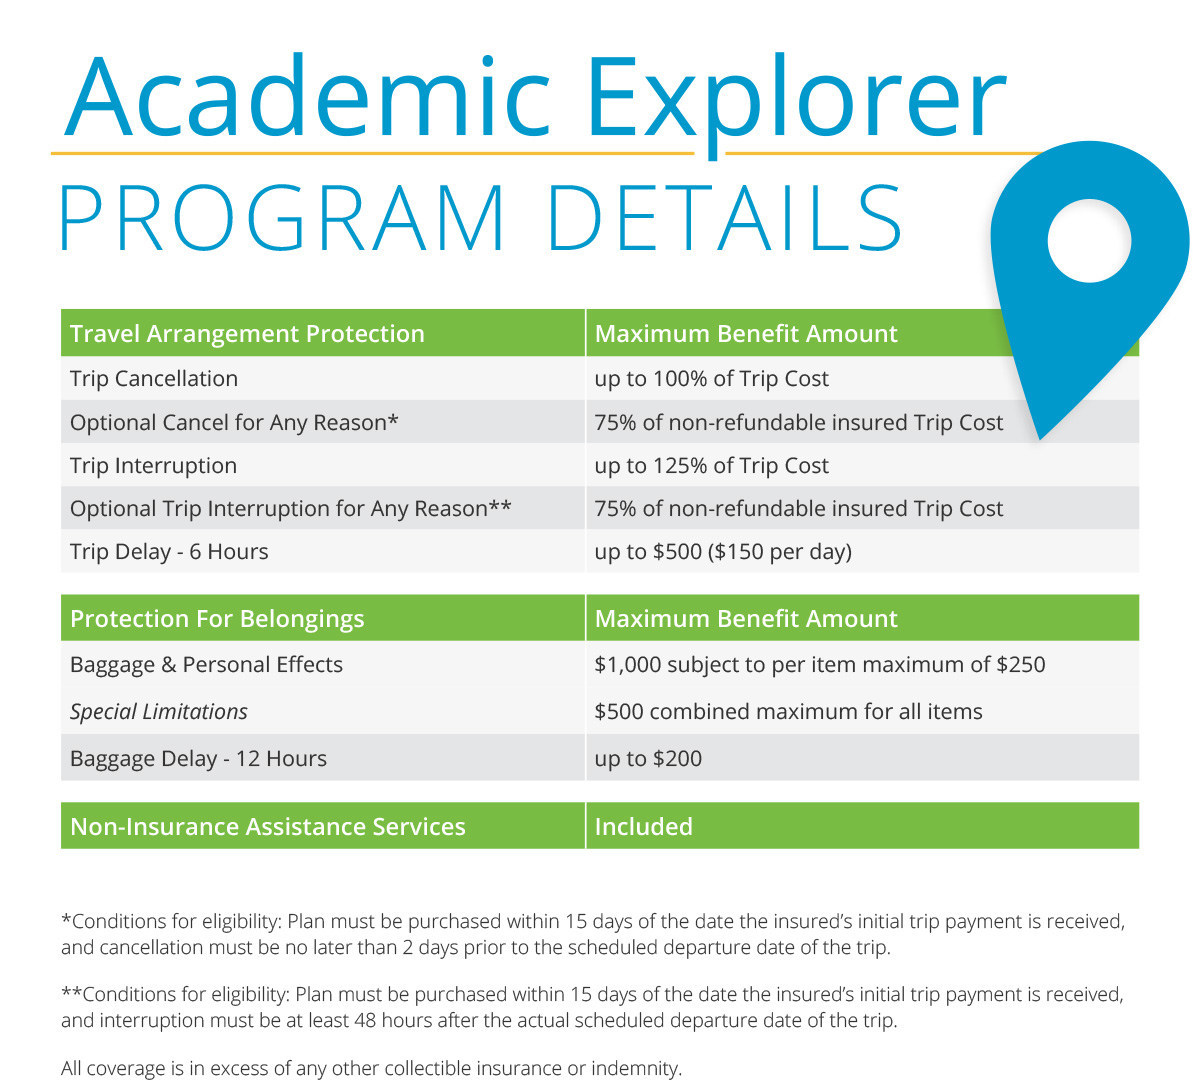 Academic Explorer Program Details